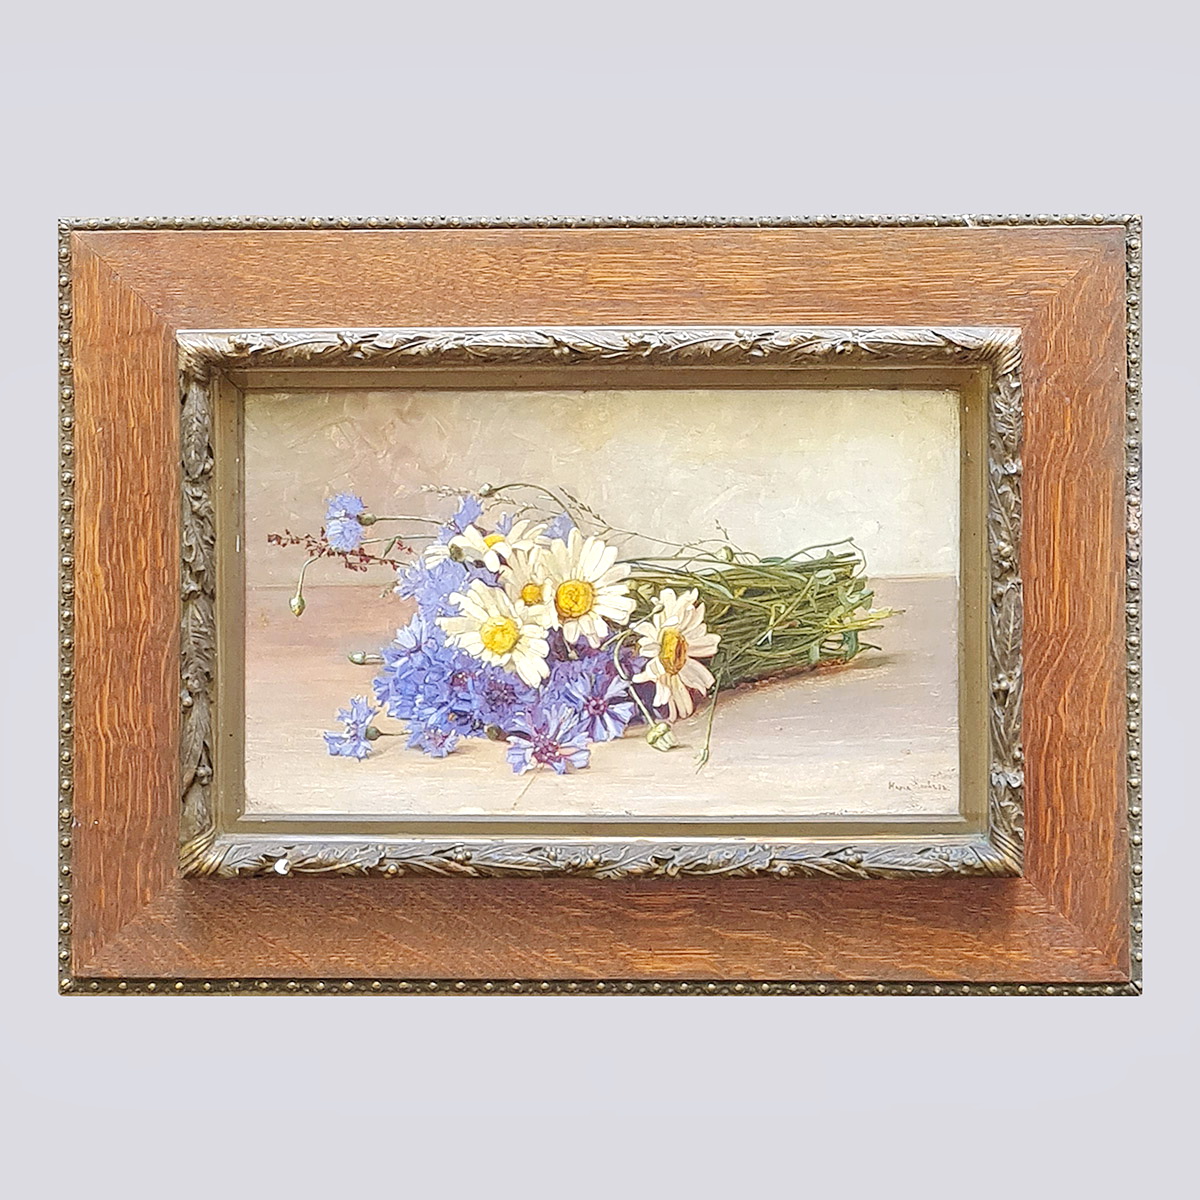 Картина «Букет цветов» (холст, масло, худ. М. Клевер)